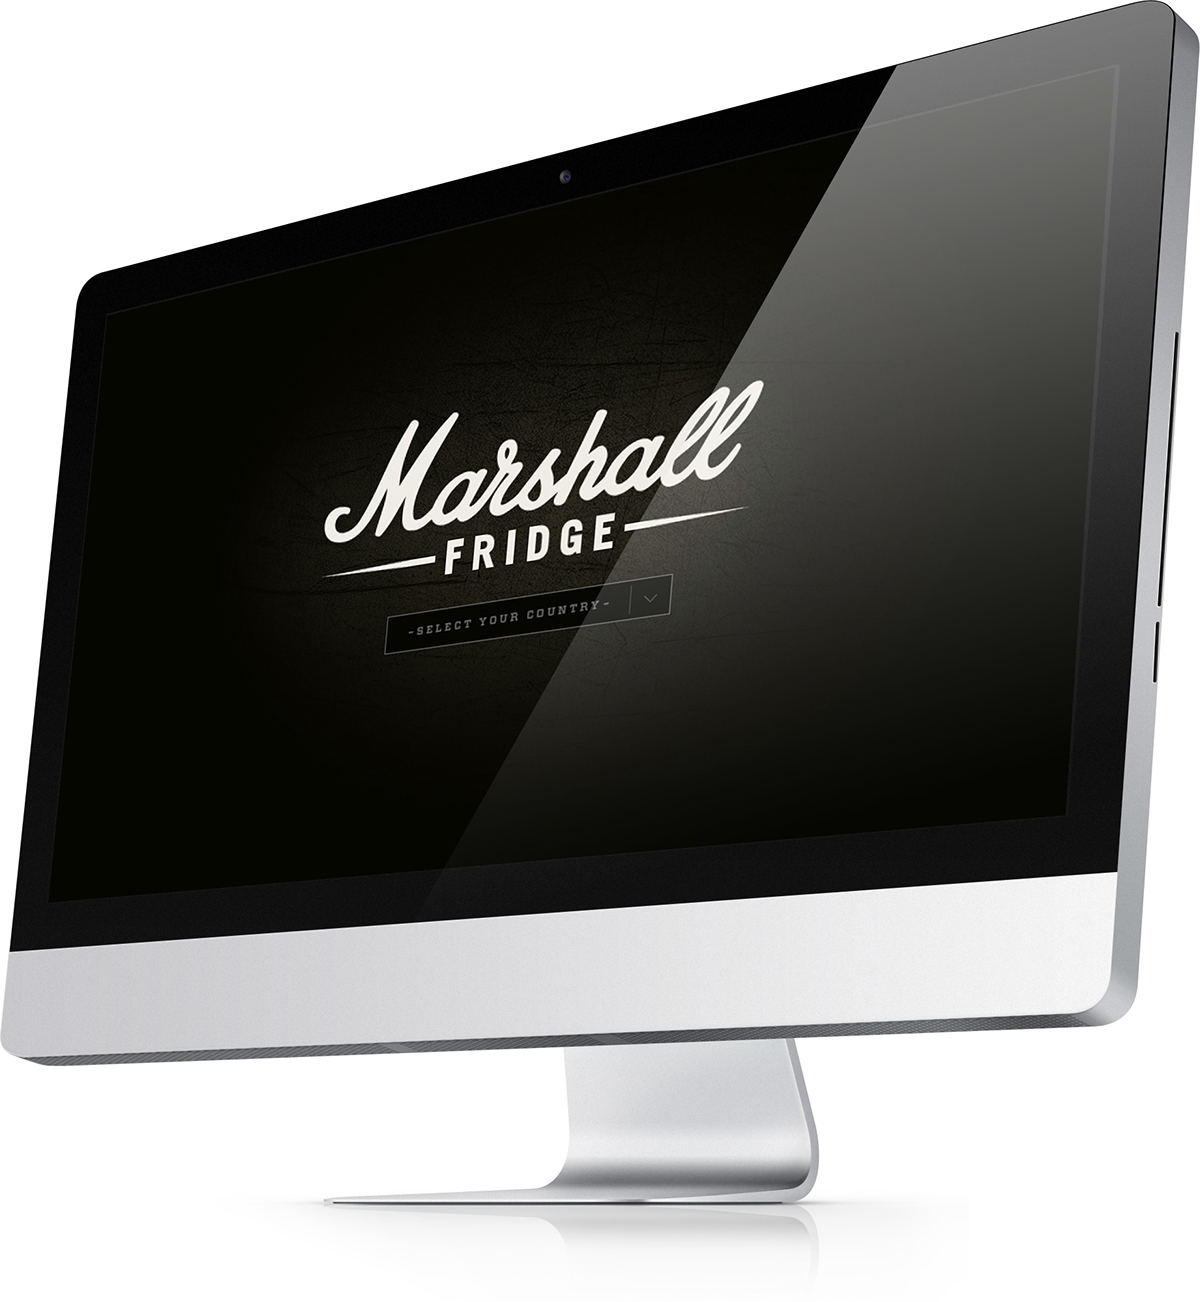 Marshall marshall fridge html5 ads marshall amps Product Site e-commerce Shopify